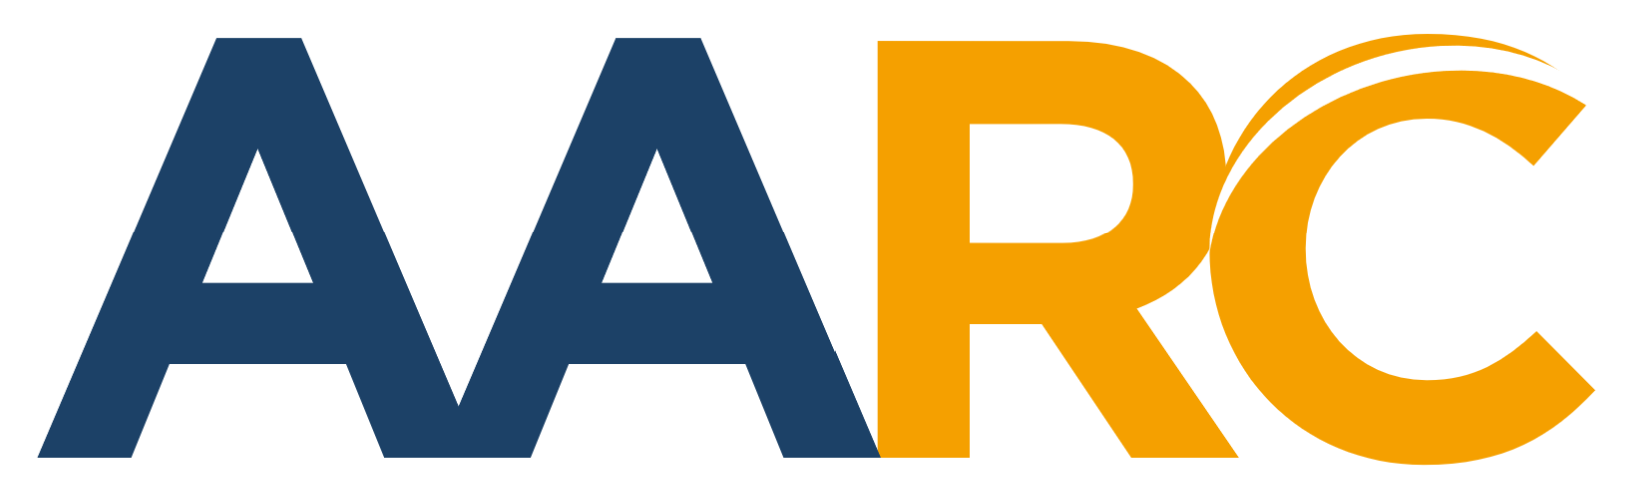 AARC - Academic Analytics Research Center